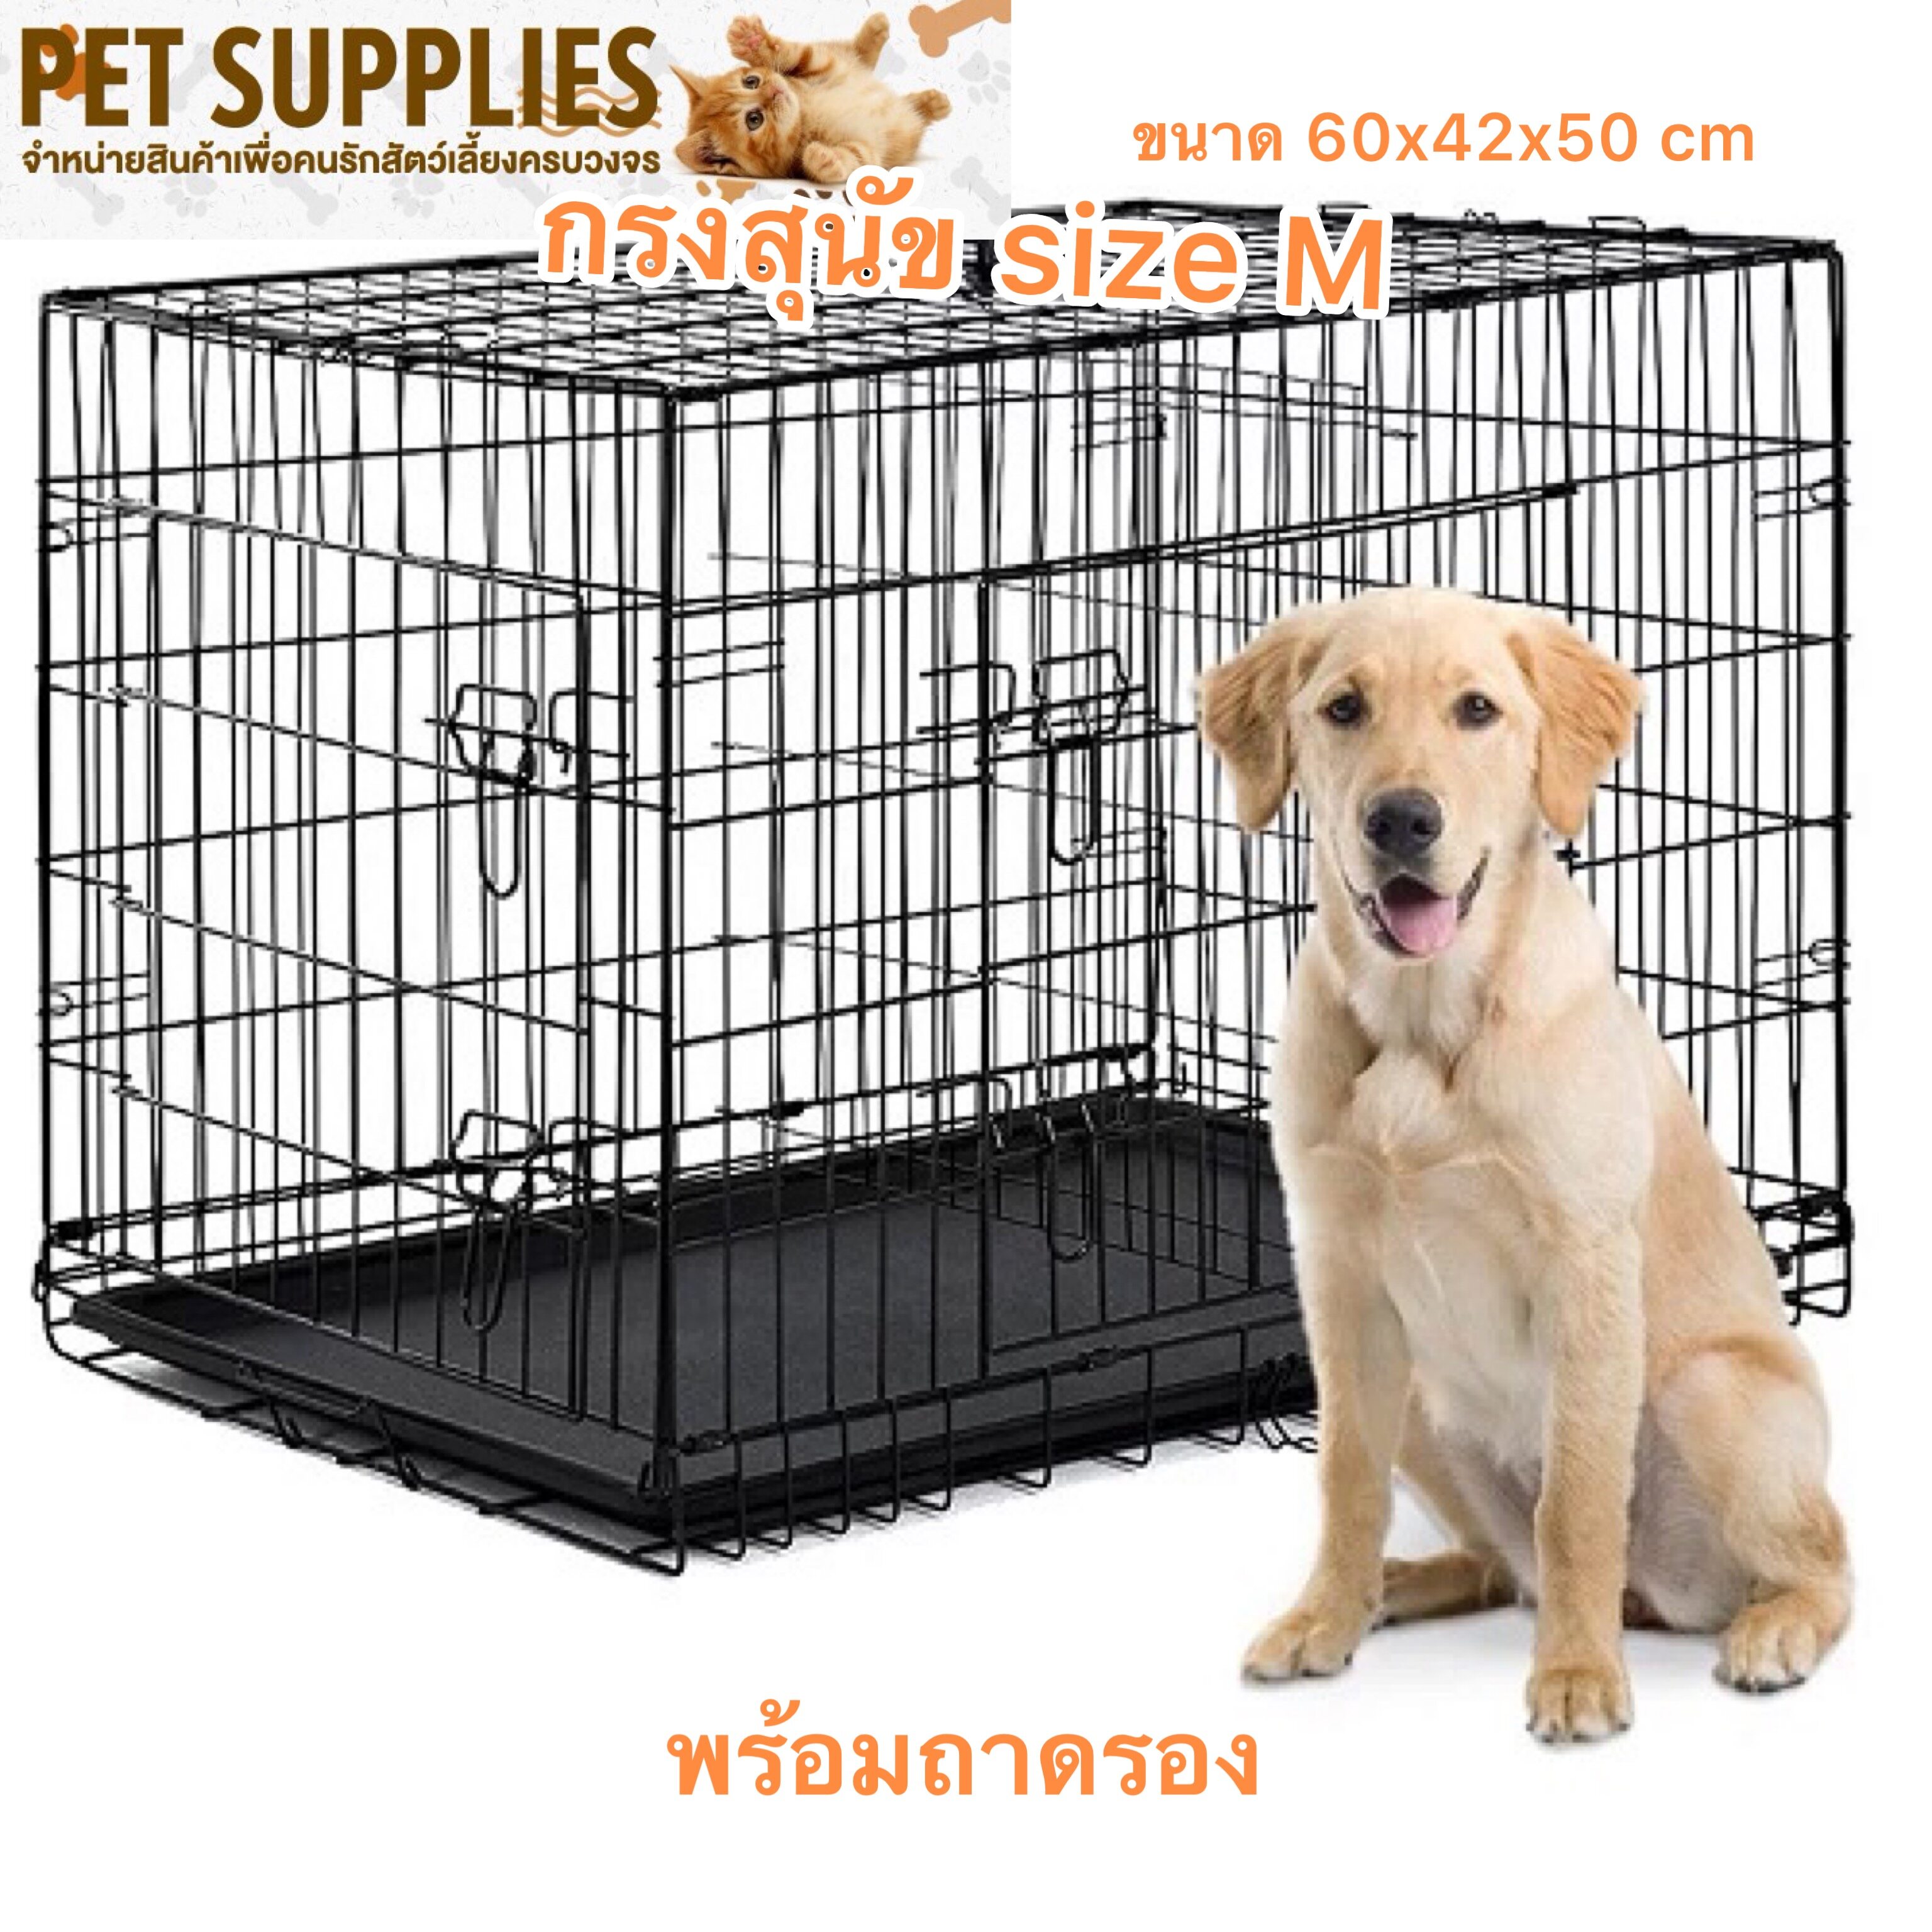 Pet Cage กรงสุนัข กรงแมว กรงกระต่าย กรงเหล็กพับพร้อมประตู พร้อมถาดรองพลาสติกรองกรง สำหรับสุนัขและแมว กรงสัตว์เลี้ยง ขนาด 60 x 42 x 50 cm